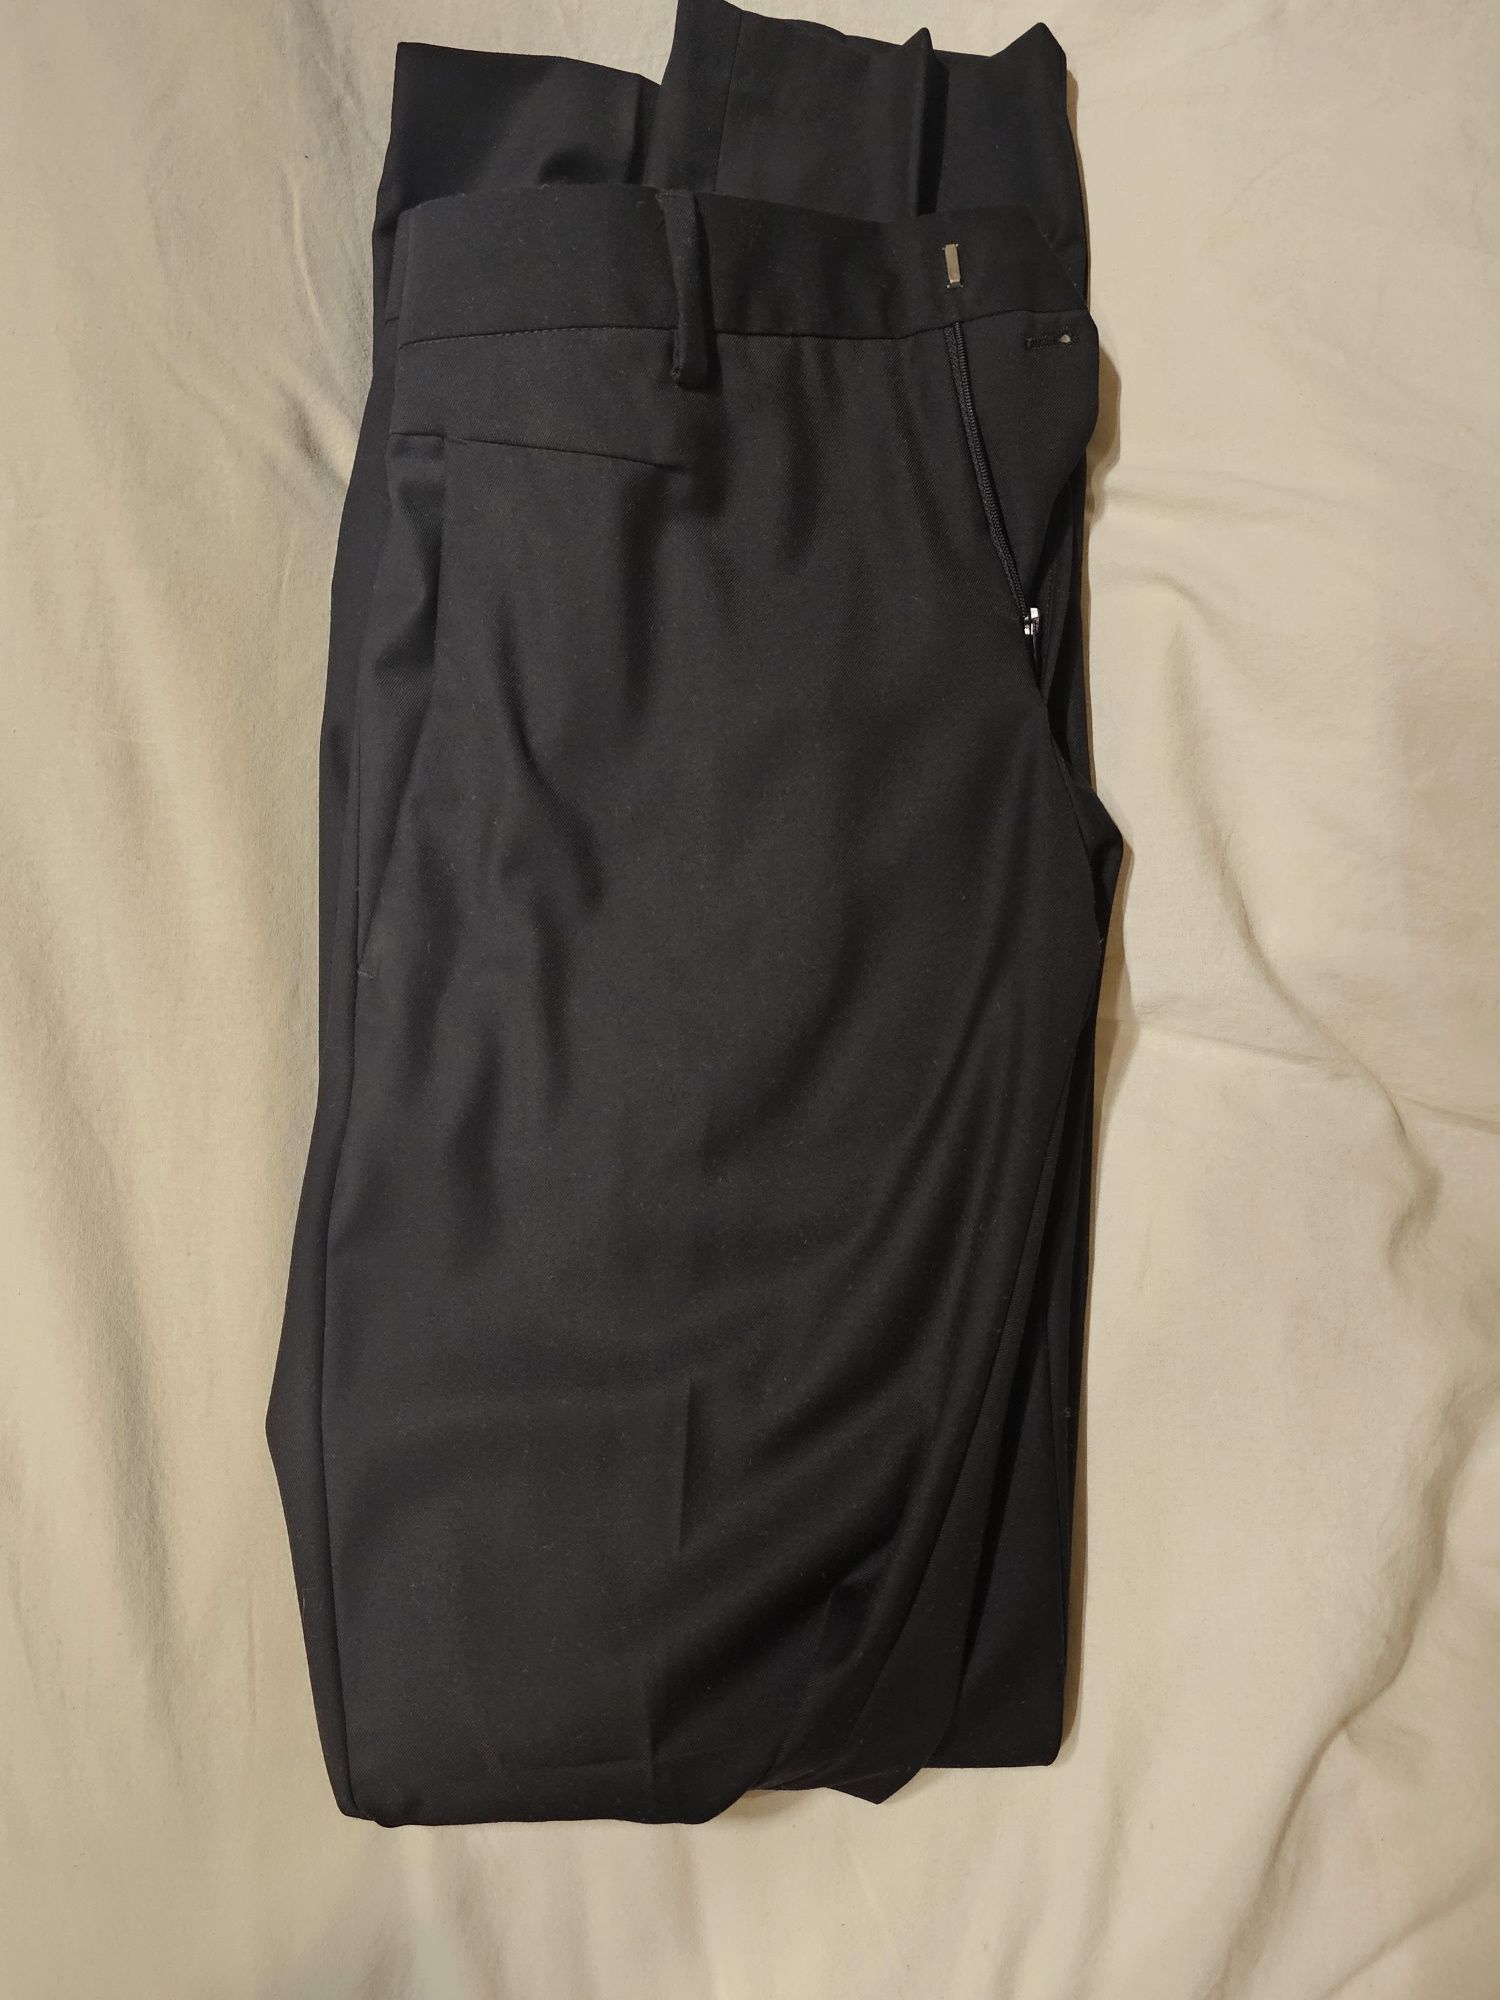 Pantaloni costum Antonio Morato Super Slim 46/30